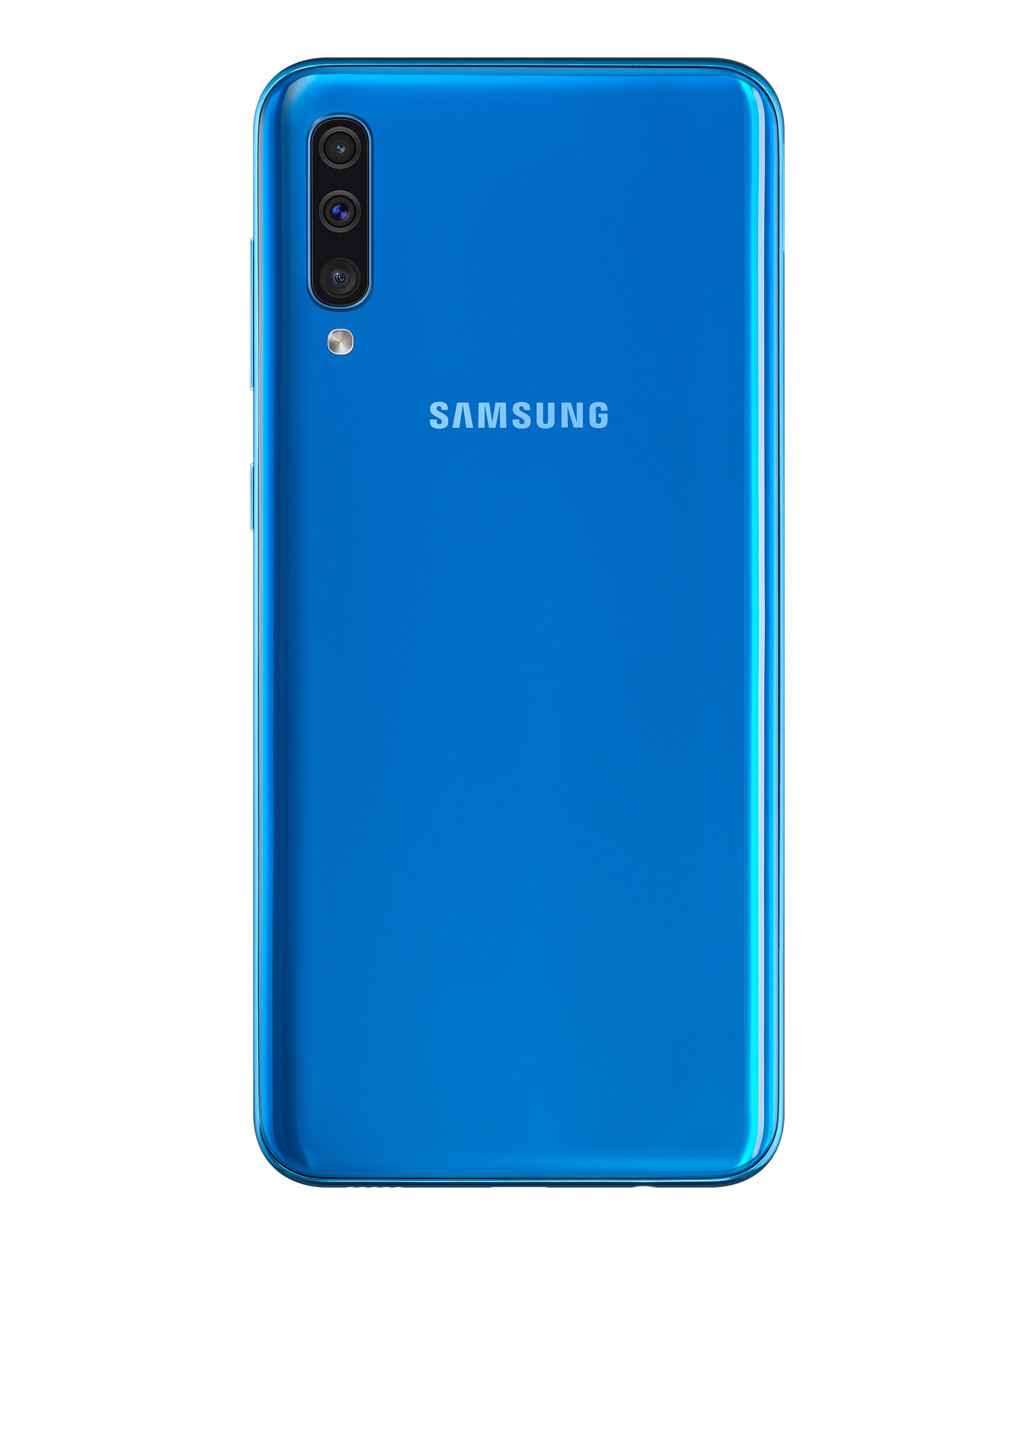 Смартфон Samsung Galaxy A50 4/64GB Blue (SM-A505FZBUSEK) синий